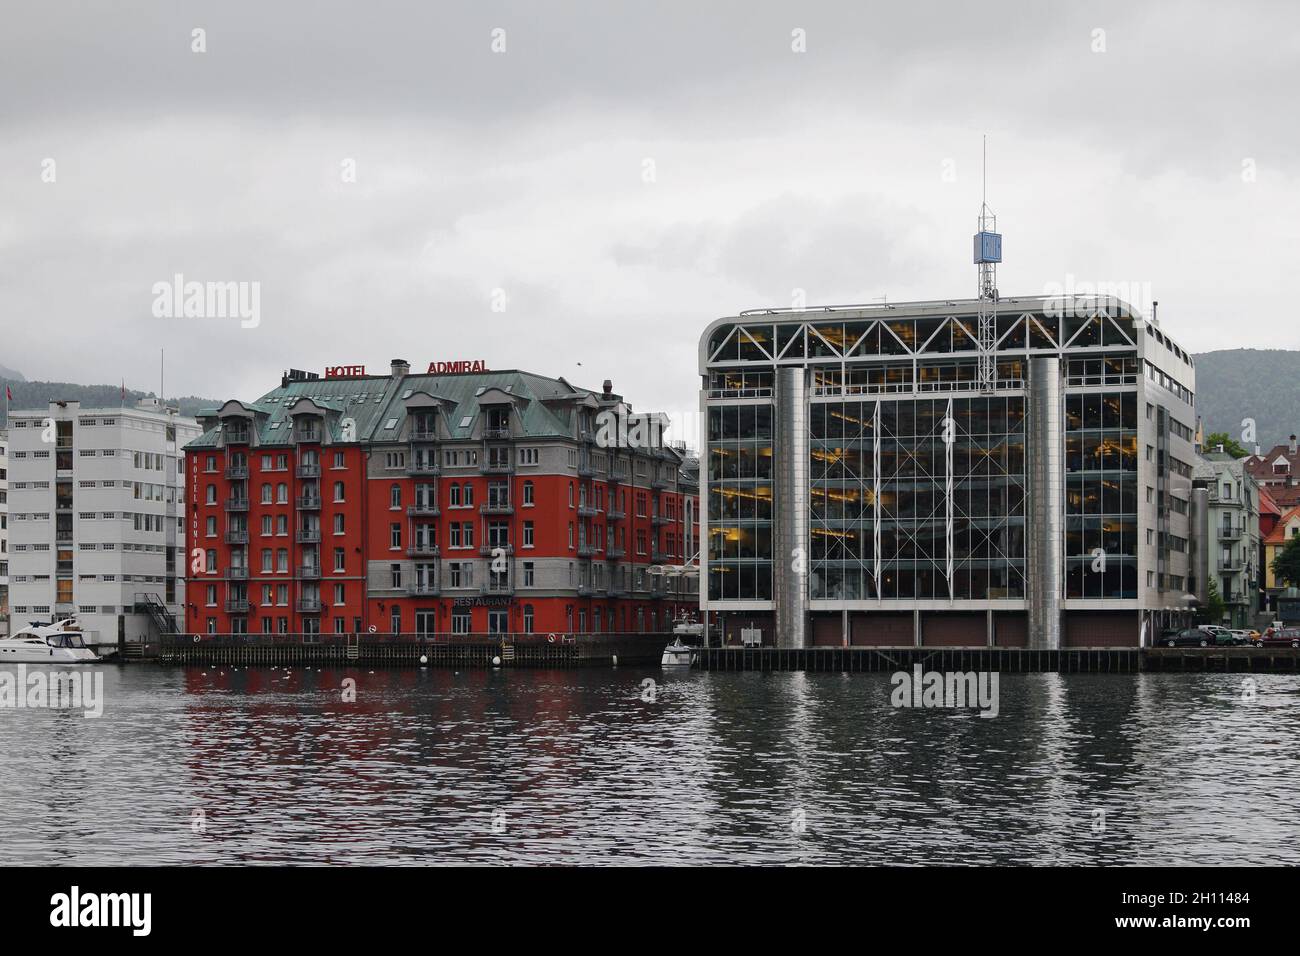 Bergen, Norway - Jun 13, 2012: Hotel and parking buildings on harbor Stock Photo